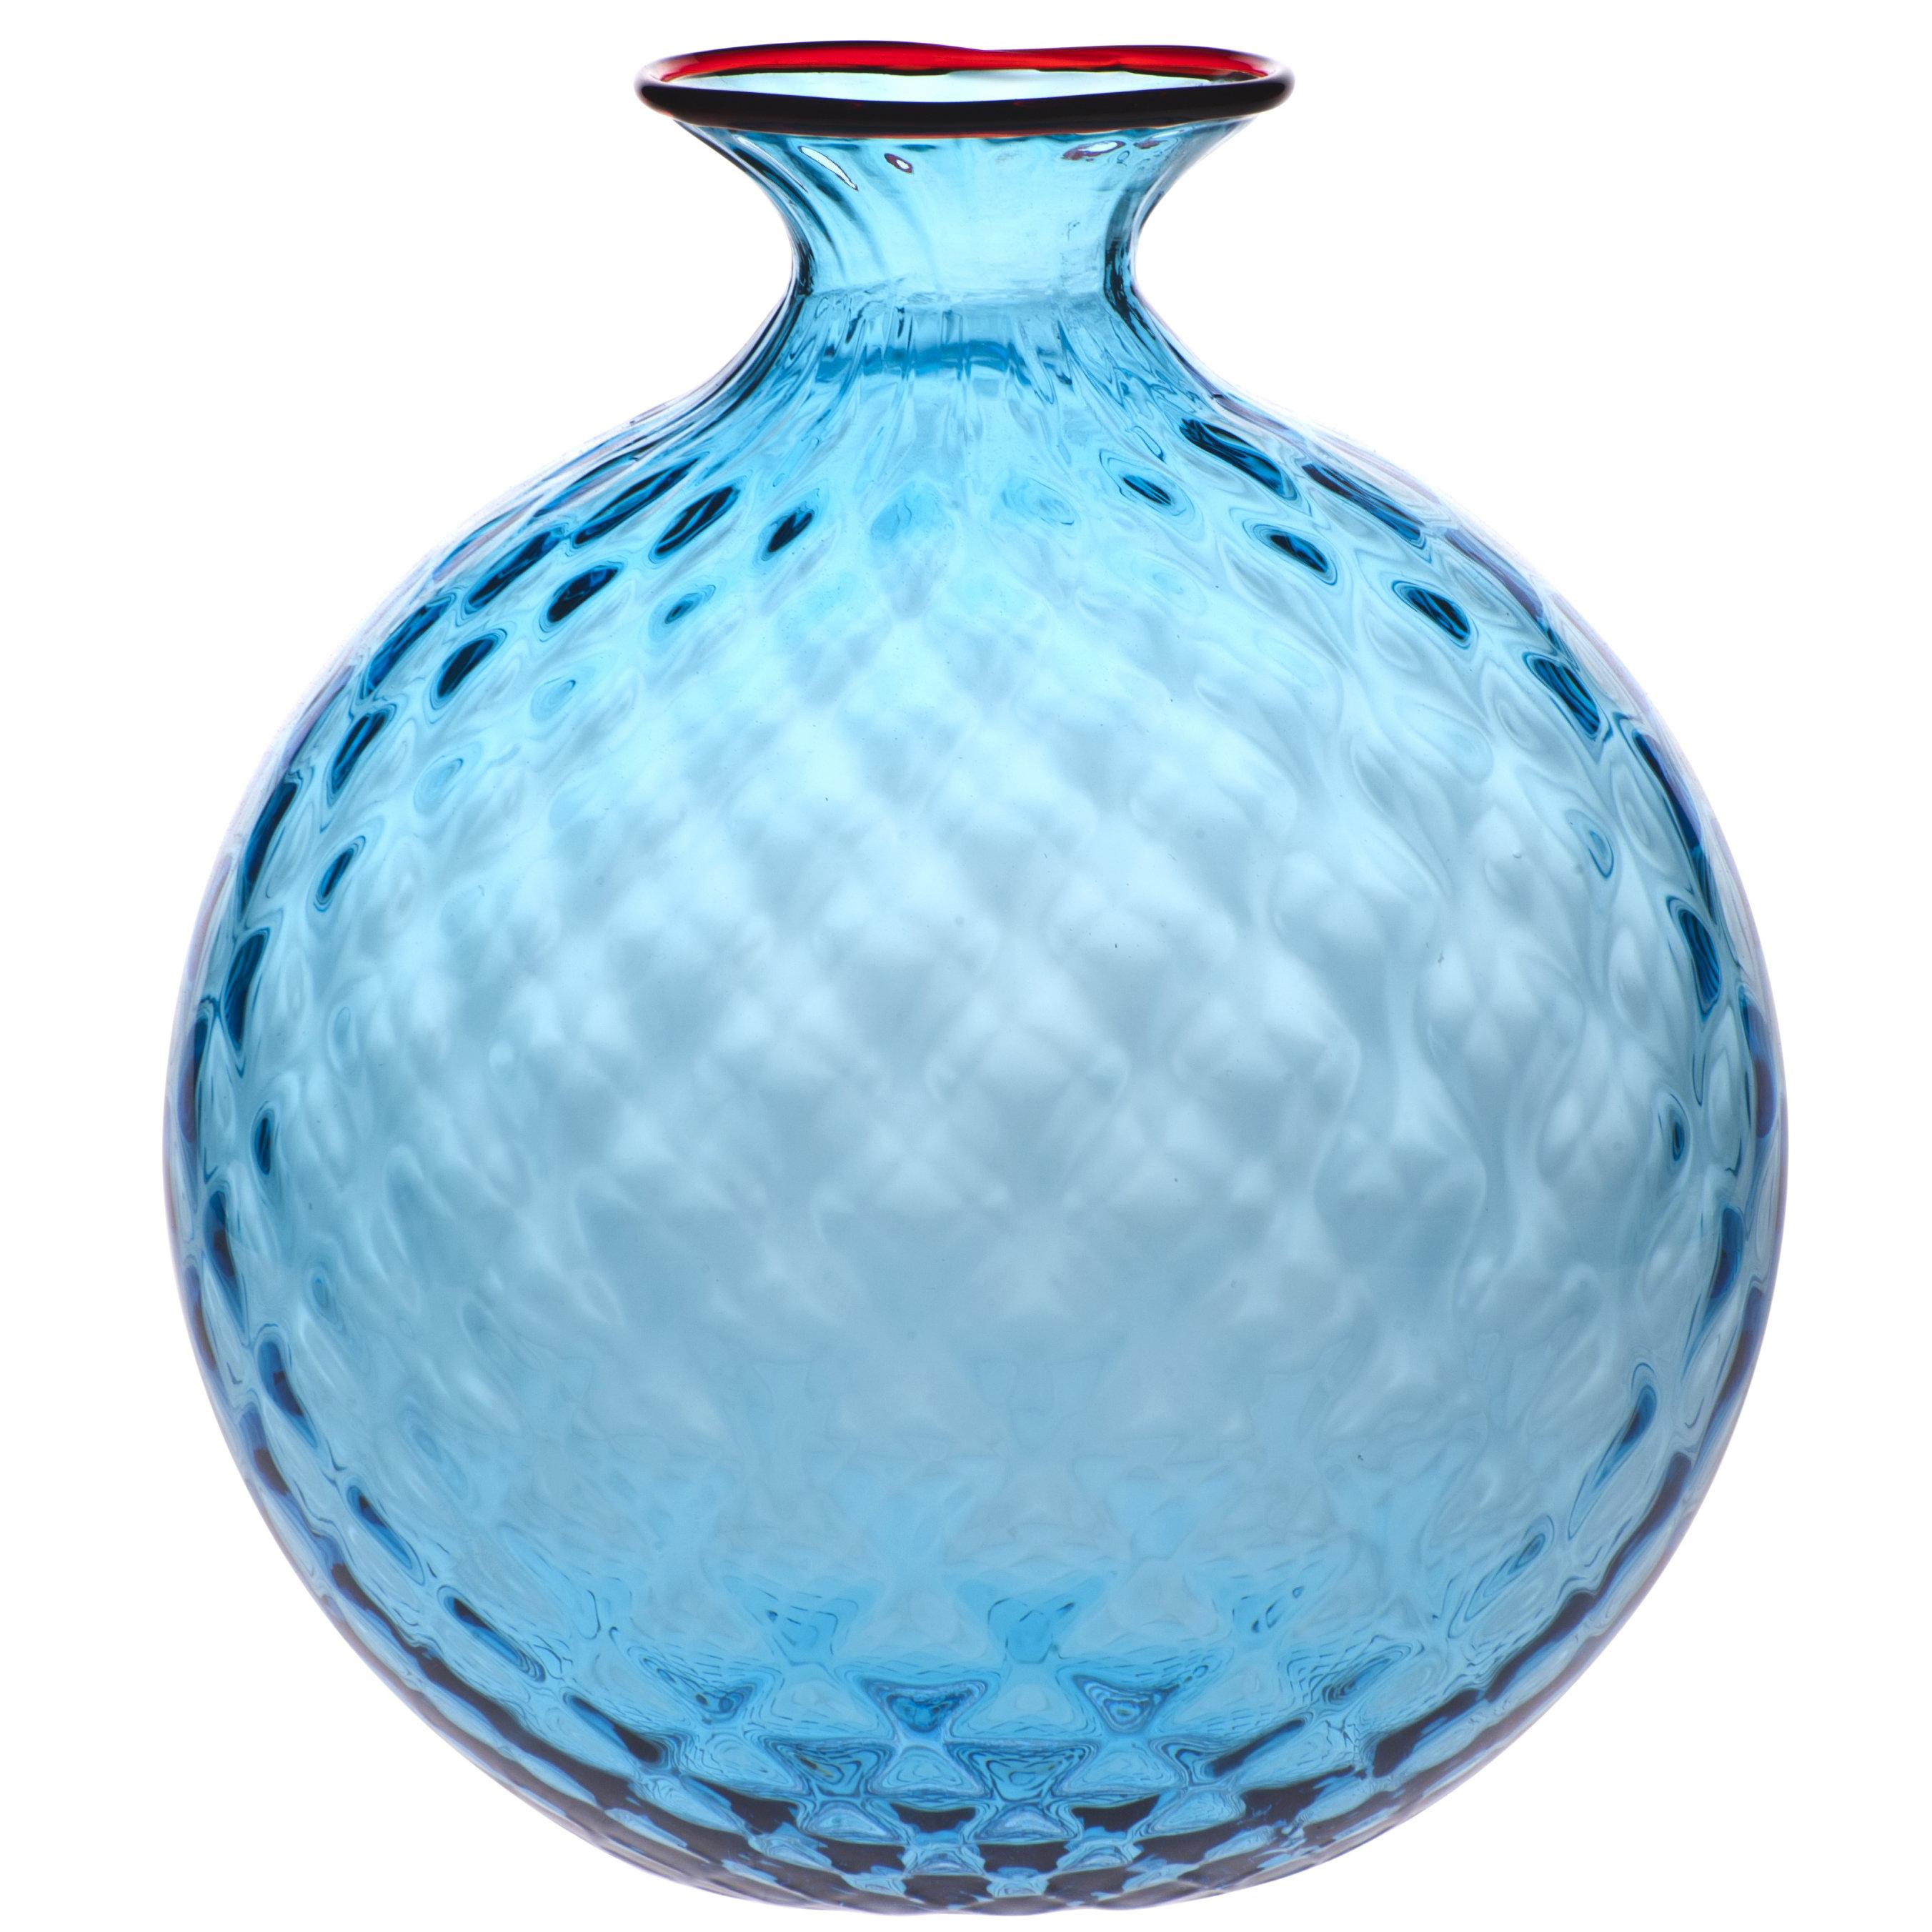 Monofiore Balloton Glass Vase in Aquamarine with Red Thread Rim by Venini